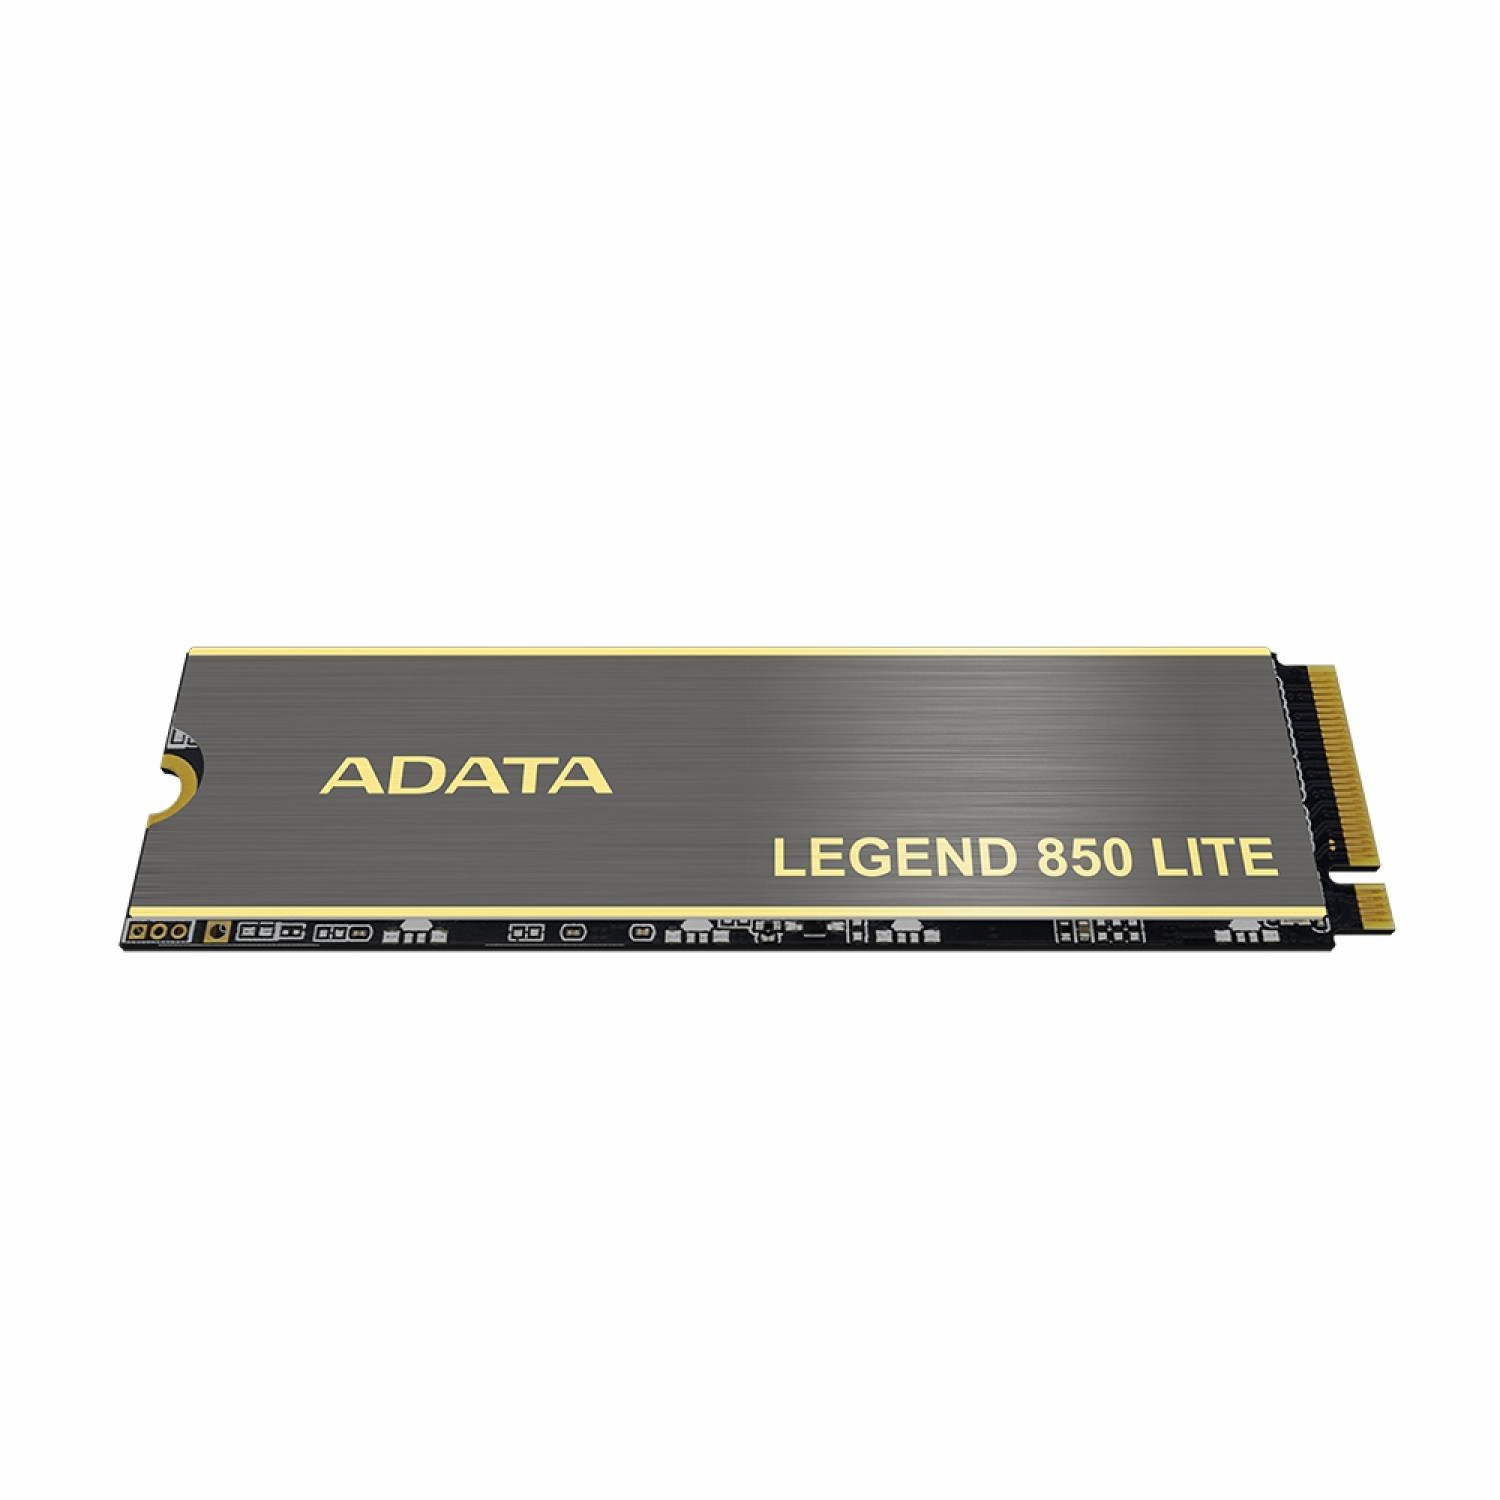 حافظه اس اس دی ADATA Legend 850 Lite 2TB - for PS5-4